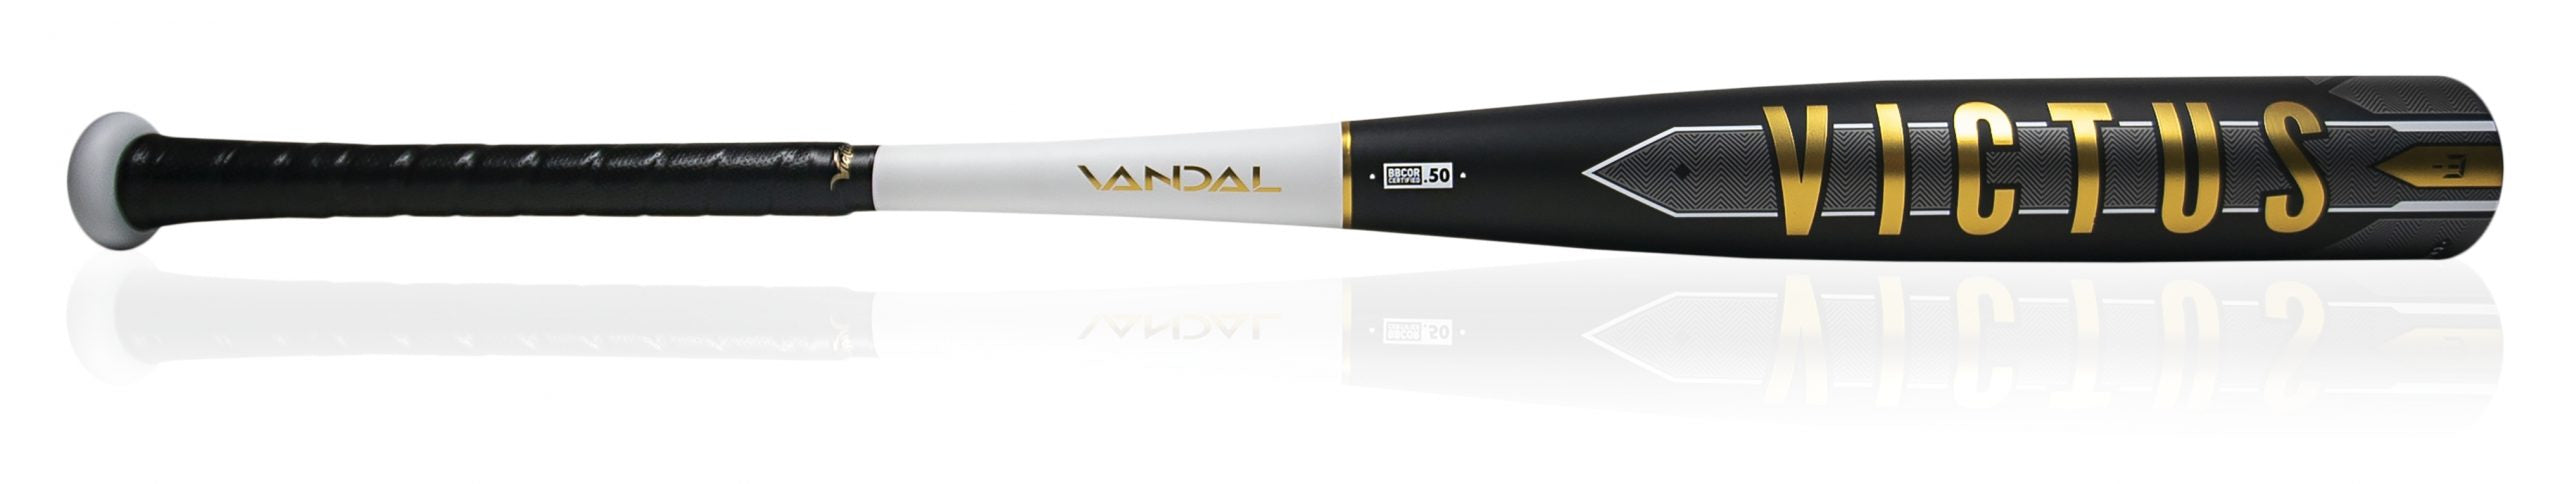 Victus - Vandal BBCOR (-3) Baseball Bat (VCBV)